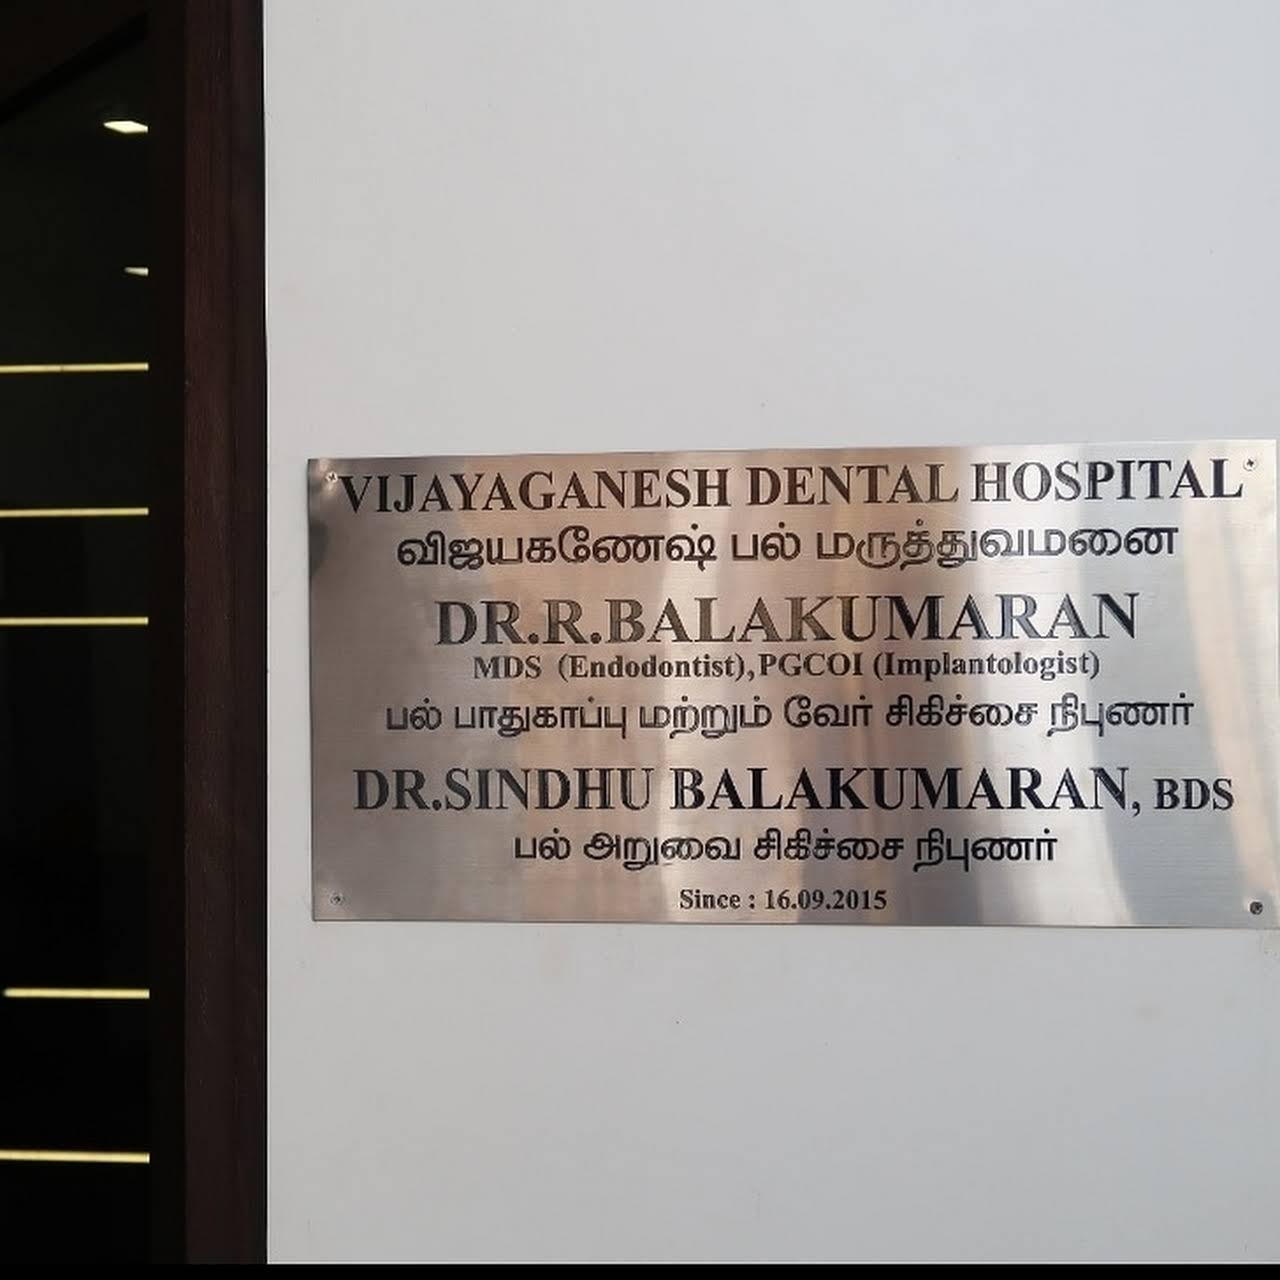 Vijayaganesh dental hospital|Hospitals|Medical Services